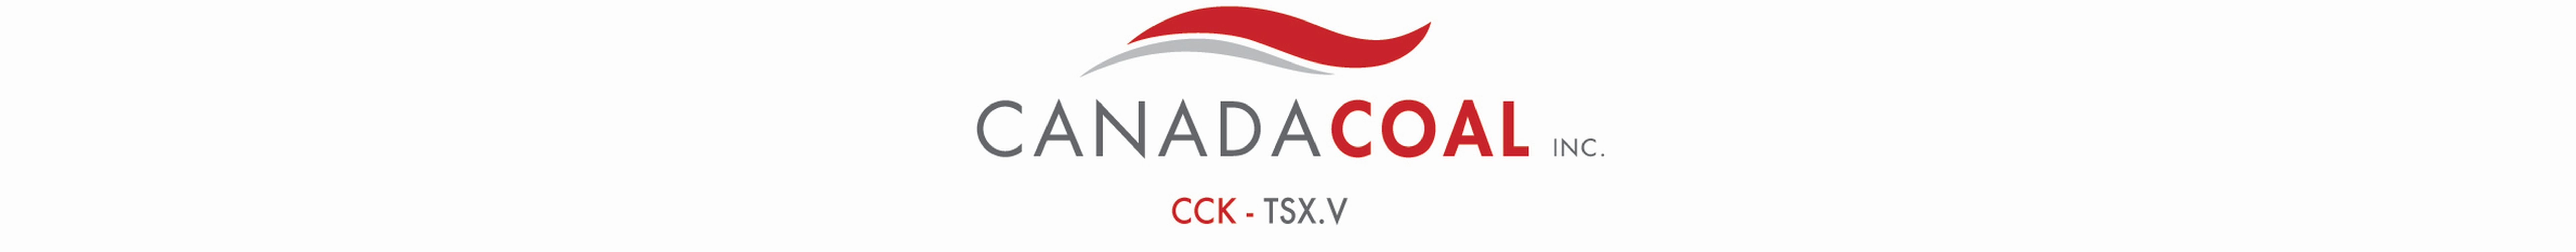 Canada Coal Announce